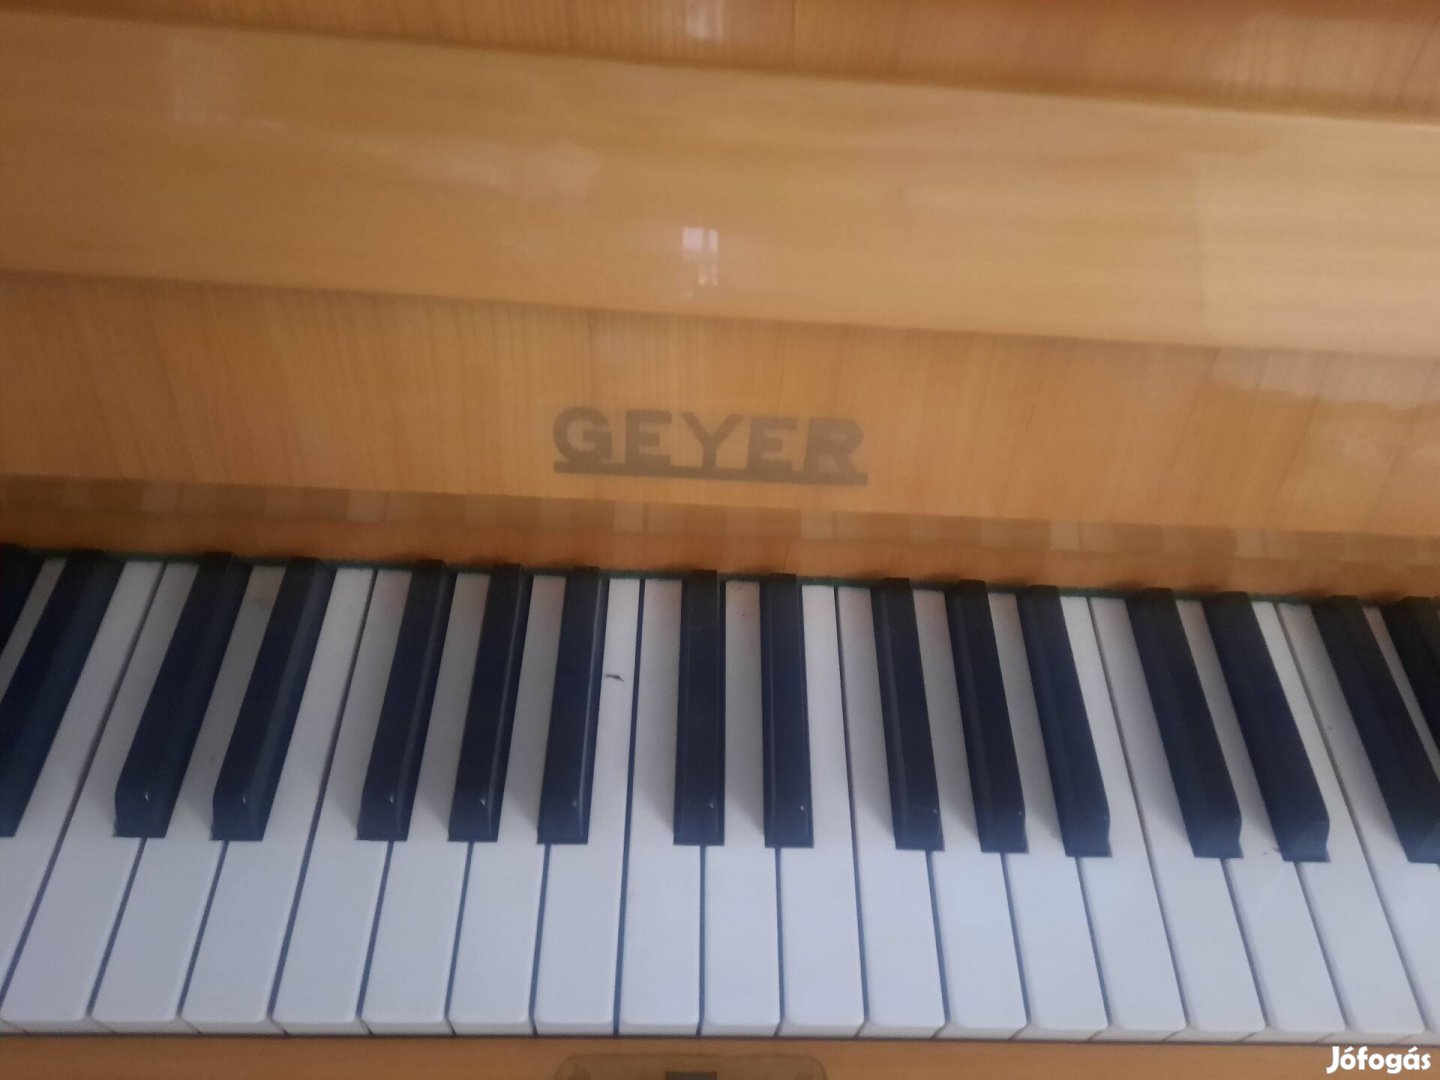 Geyer Pianino használt 